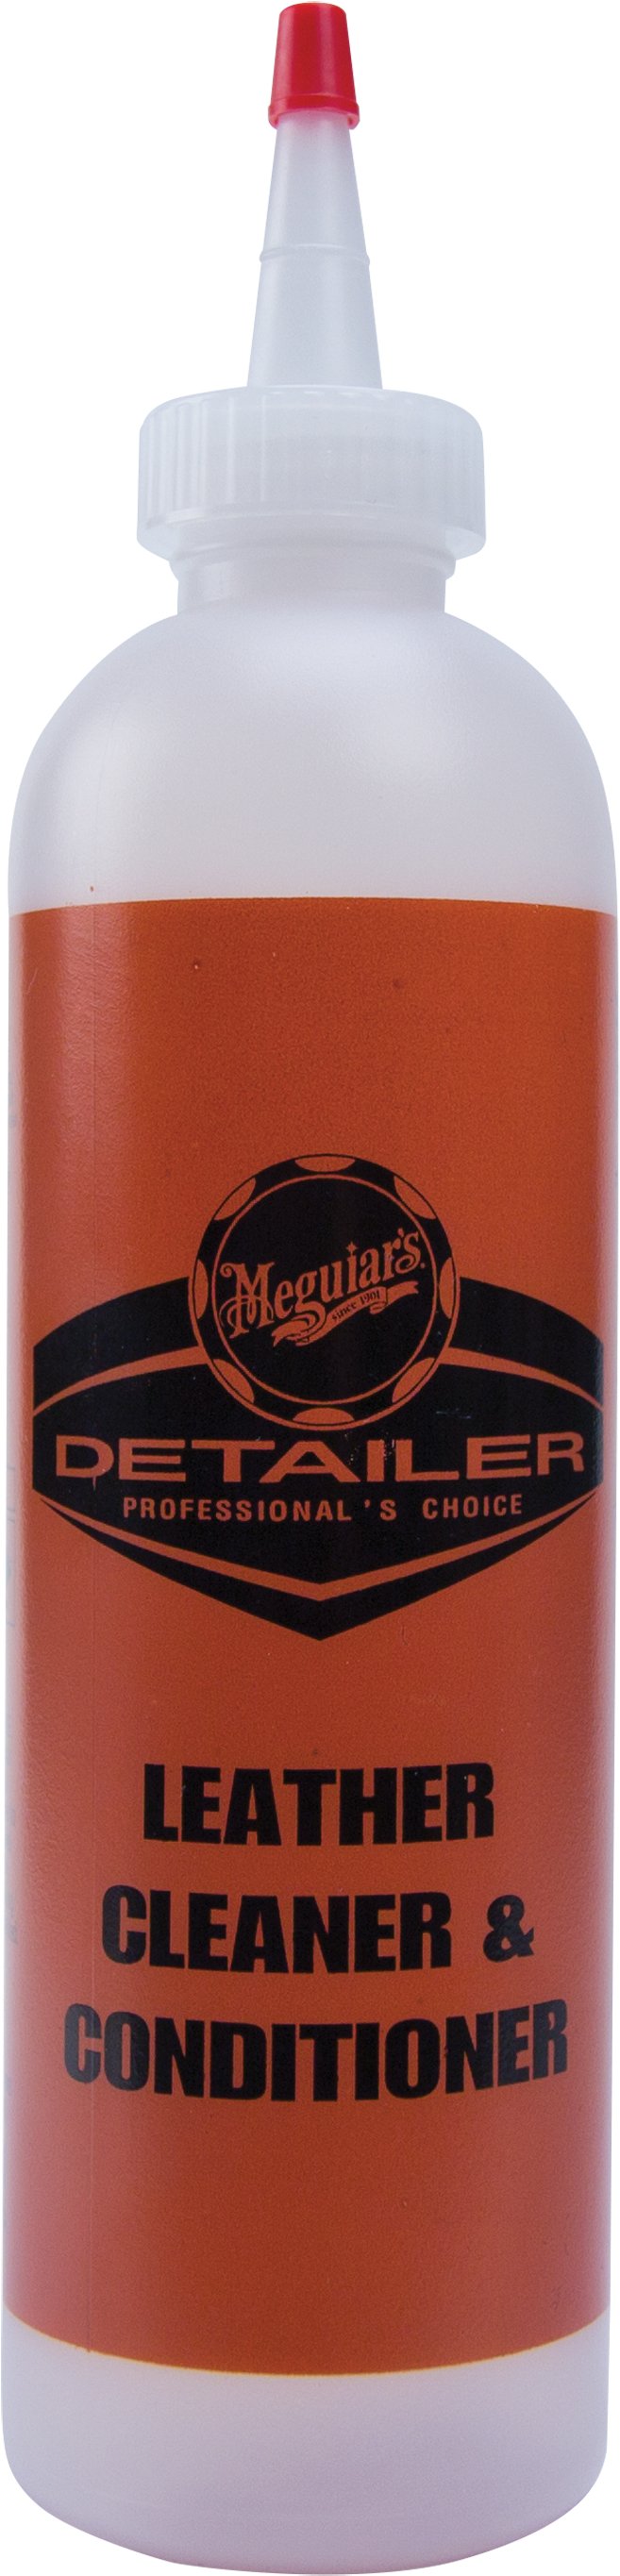 Leather Cleaner & Conditioner Bottle - Meguiar's D20180 Leather Cleaner And Conditioner Bottle (3000x3000), Png Download